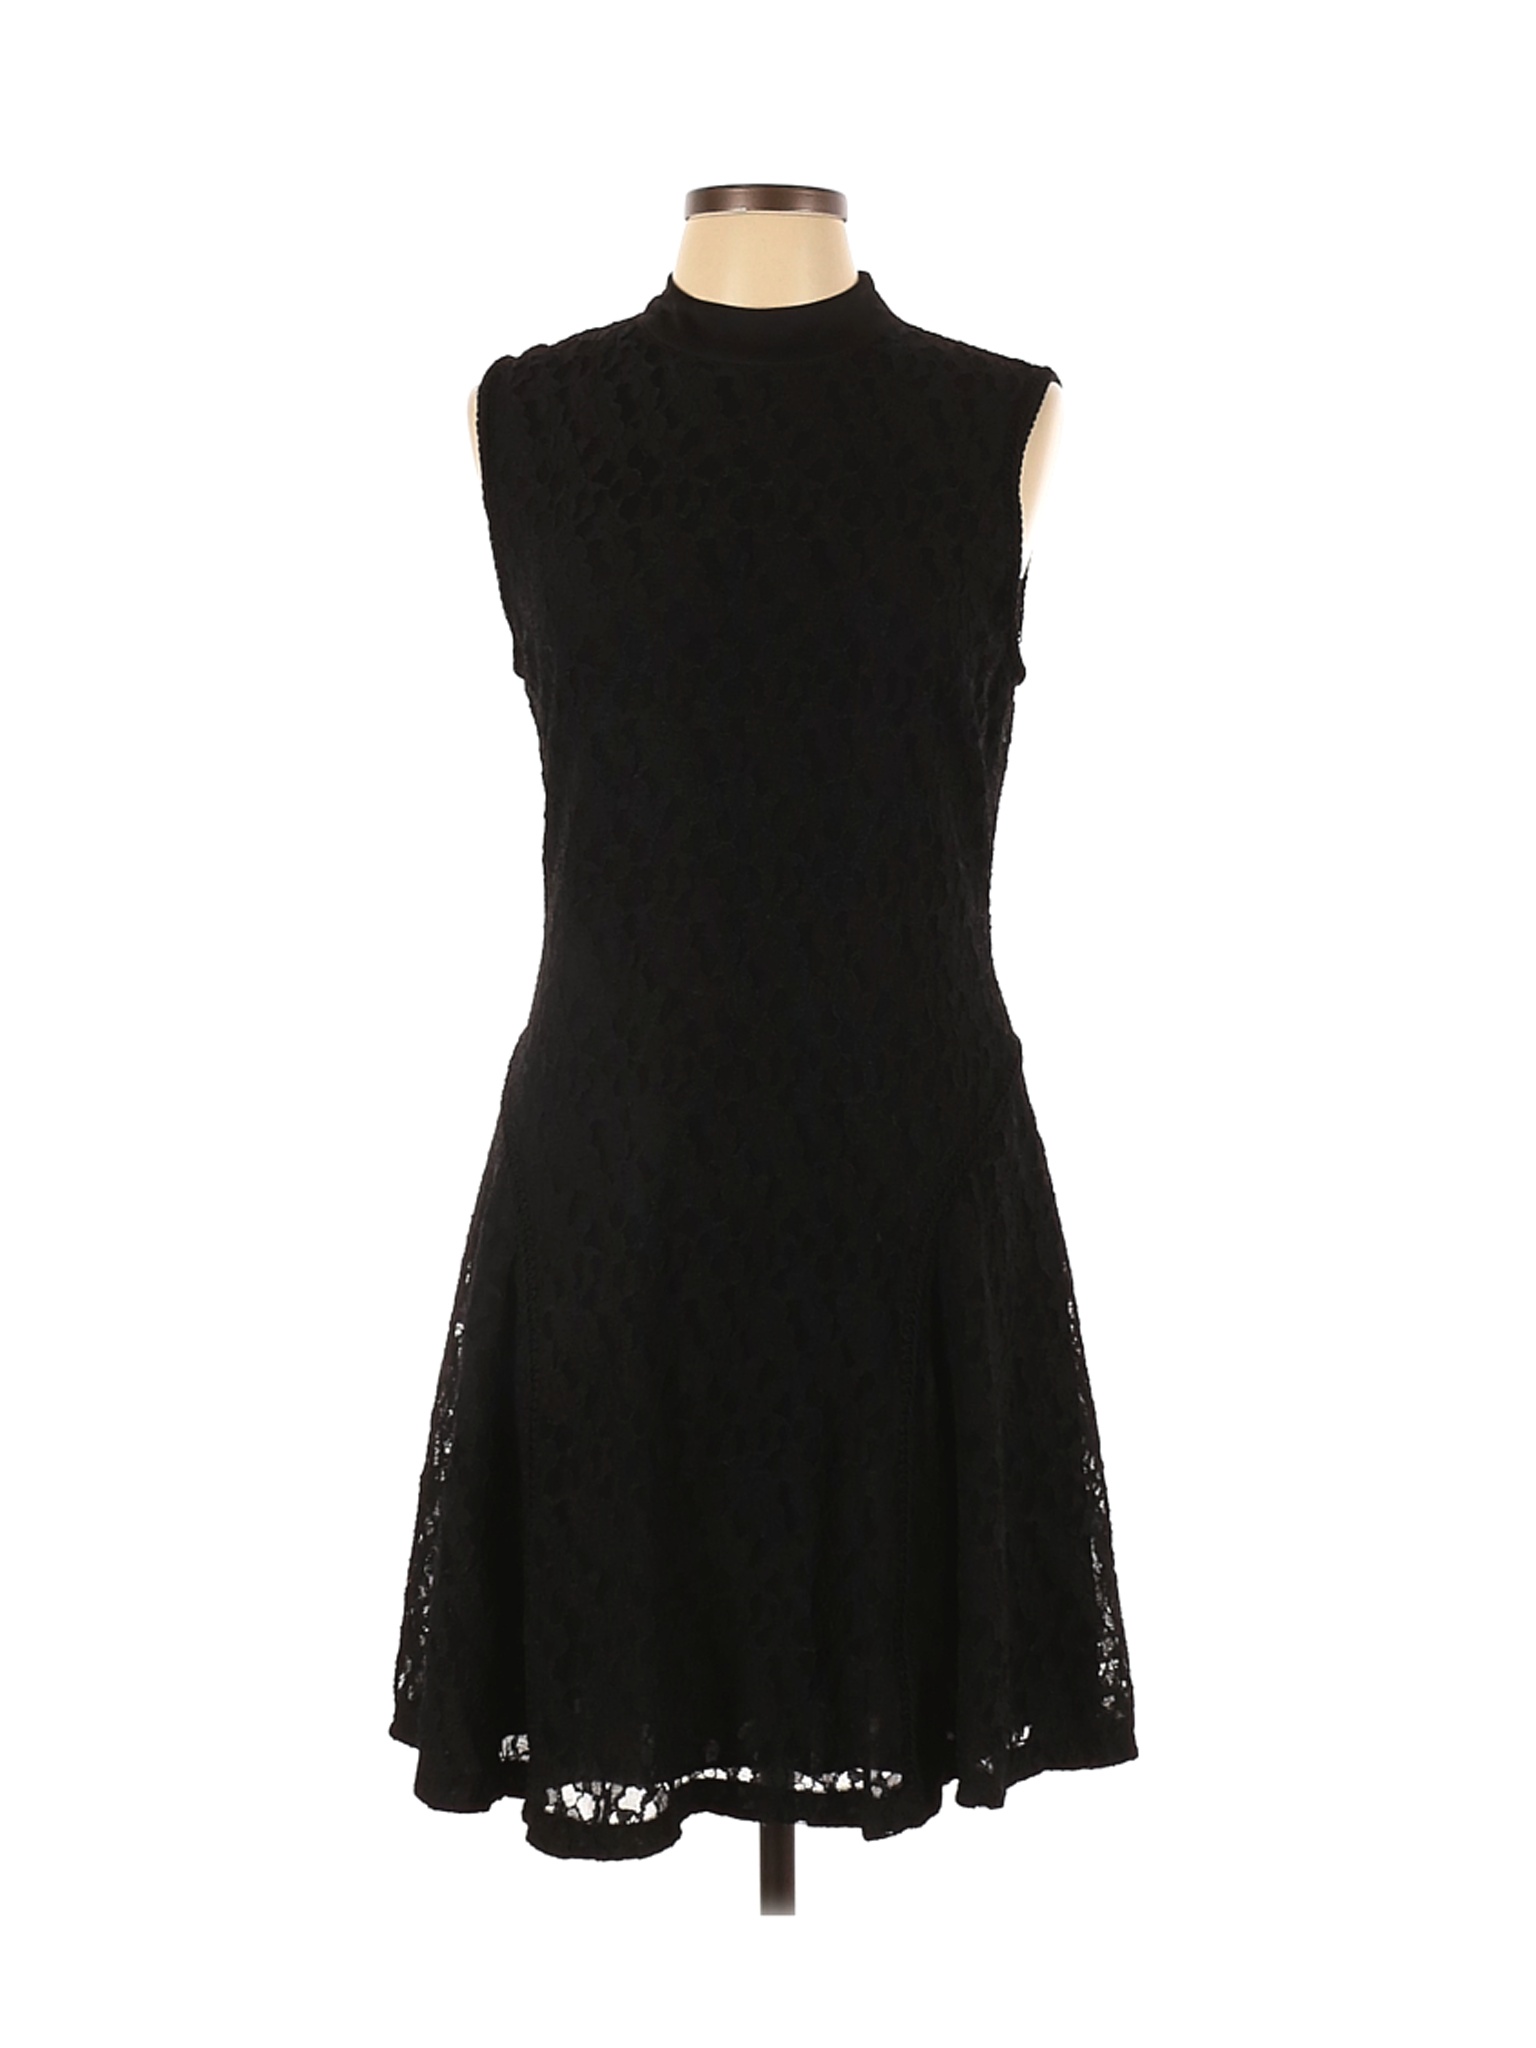 Juicy Couture Black Label Women Black Casual Dress L | eBay